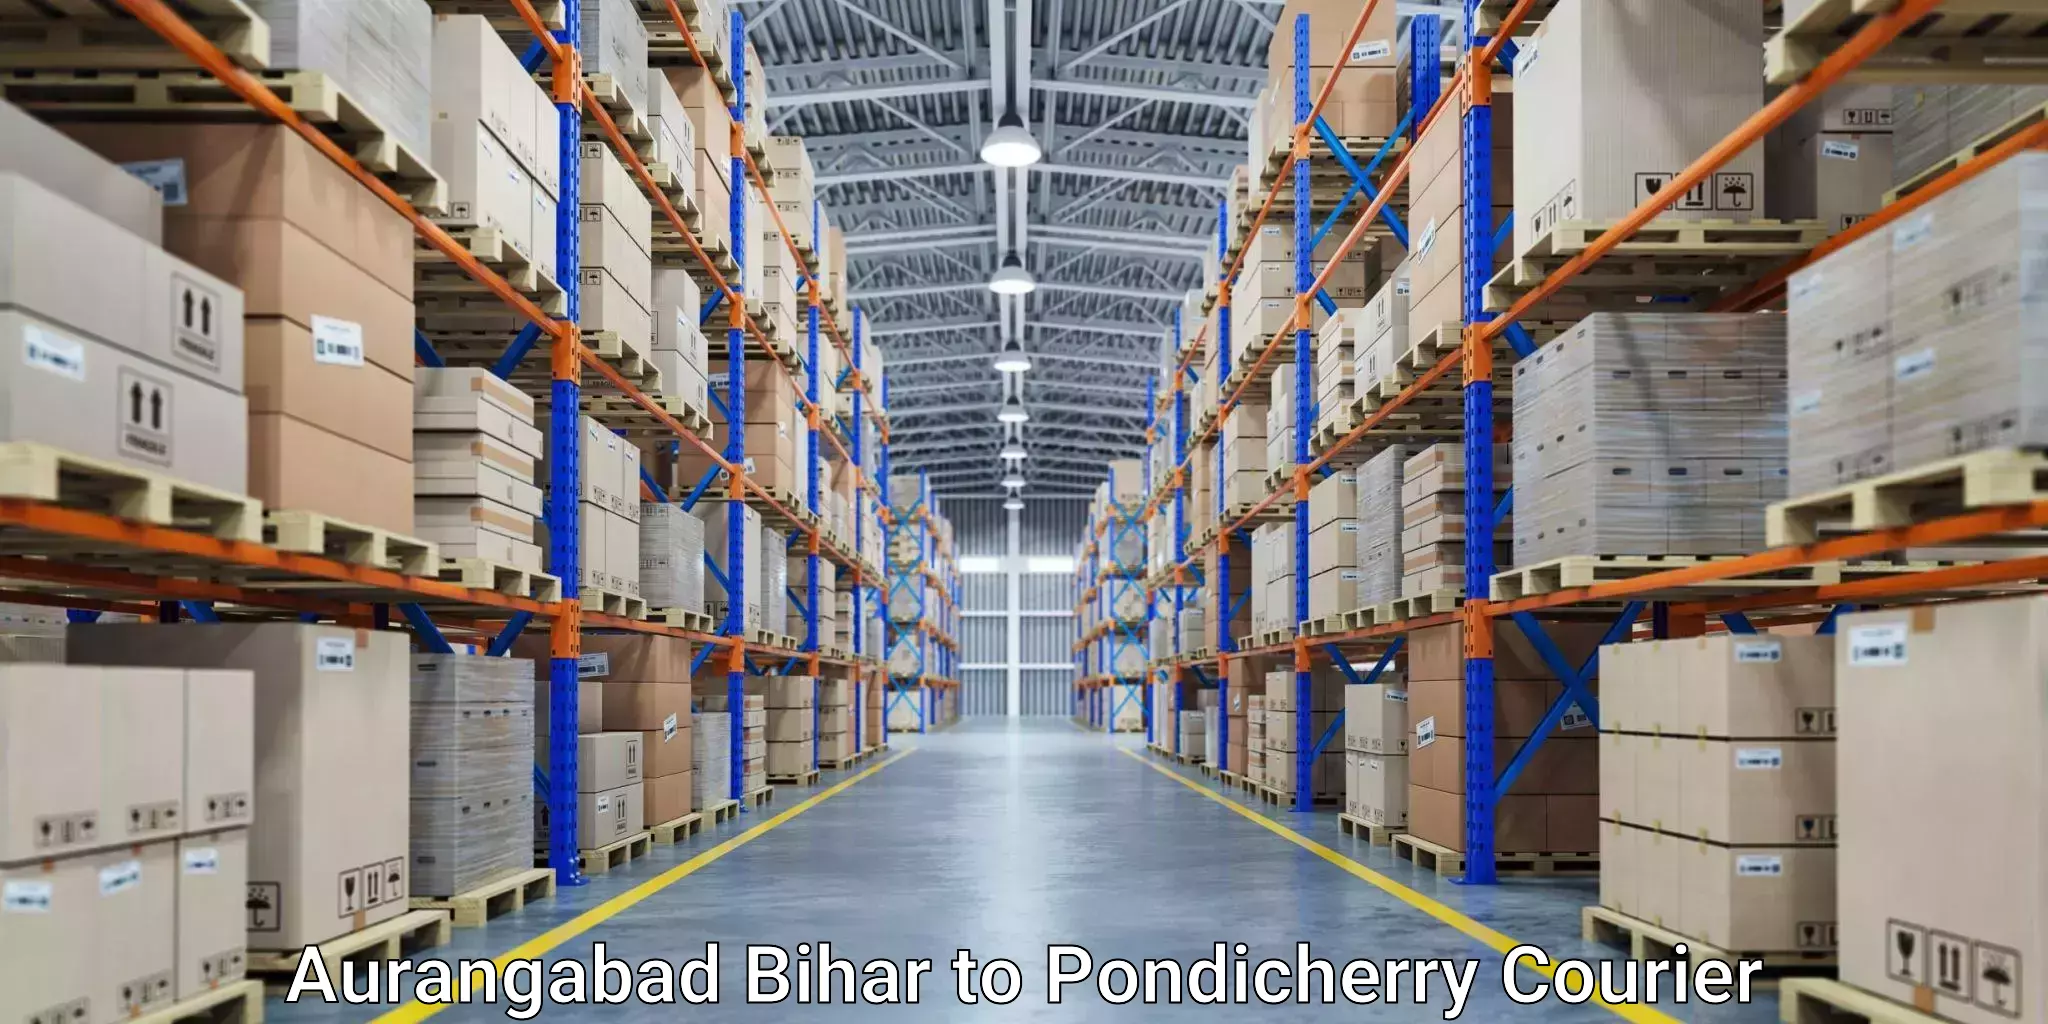 High-speed delivery Aurangabad Bihar to Pondicherry University